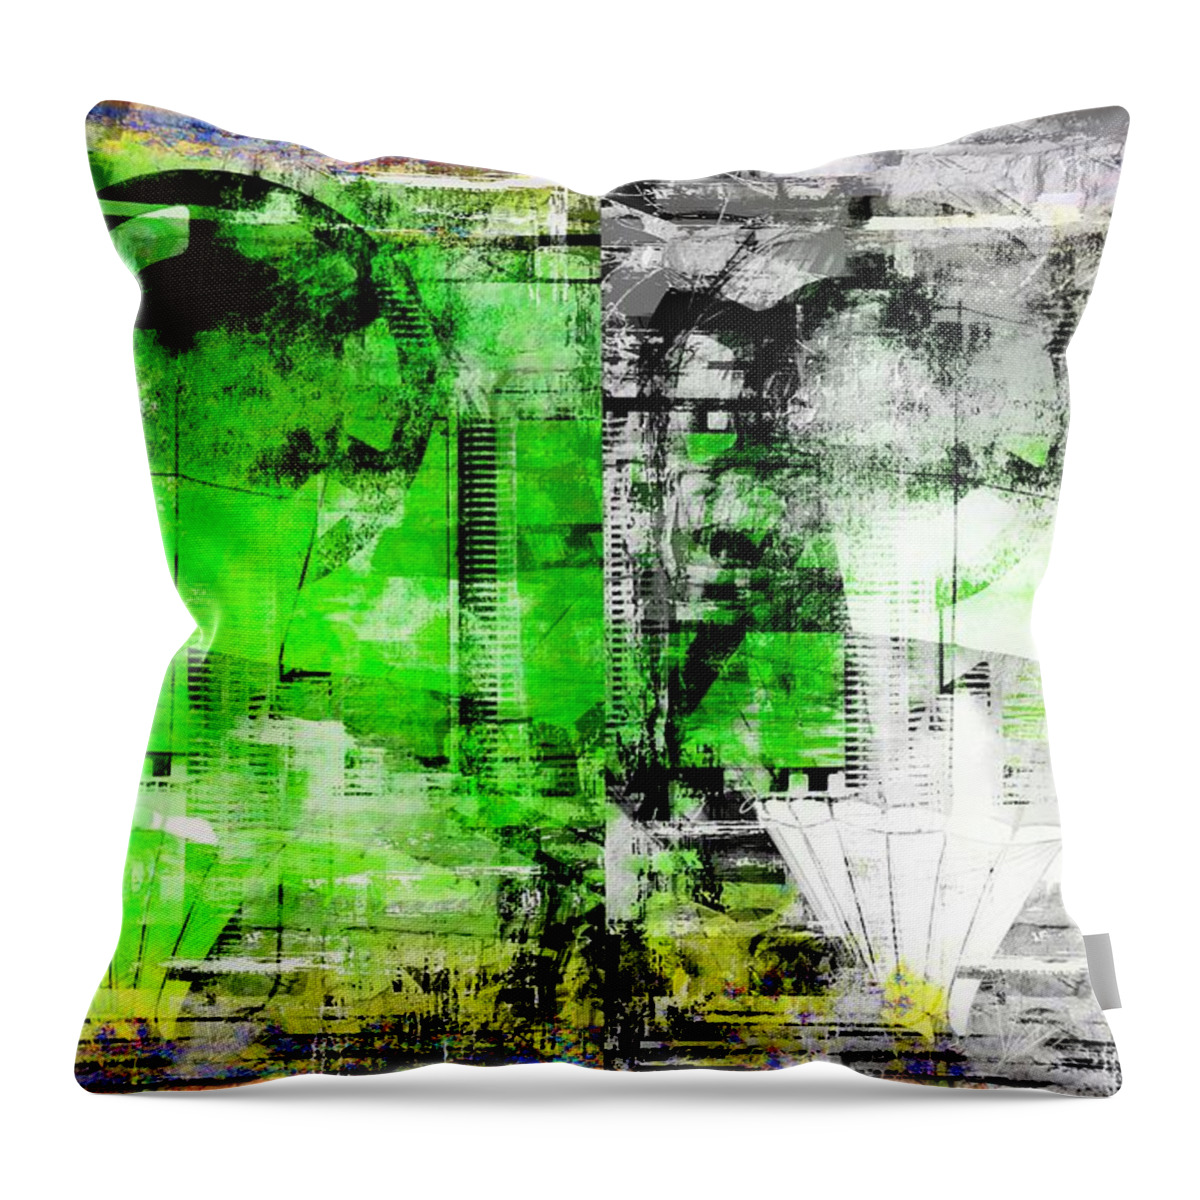 Abstract Throw Pillow featuring the digital art FilmTape by Art Di